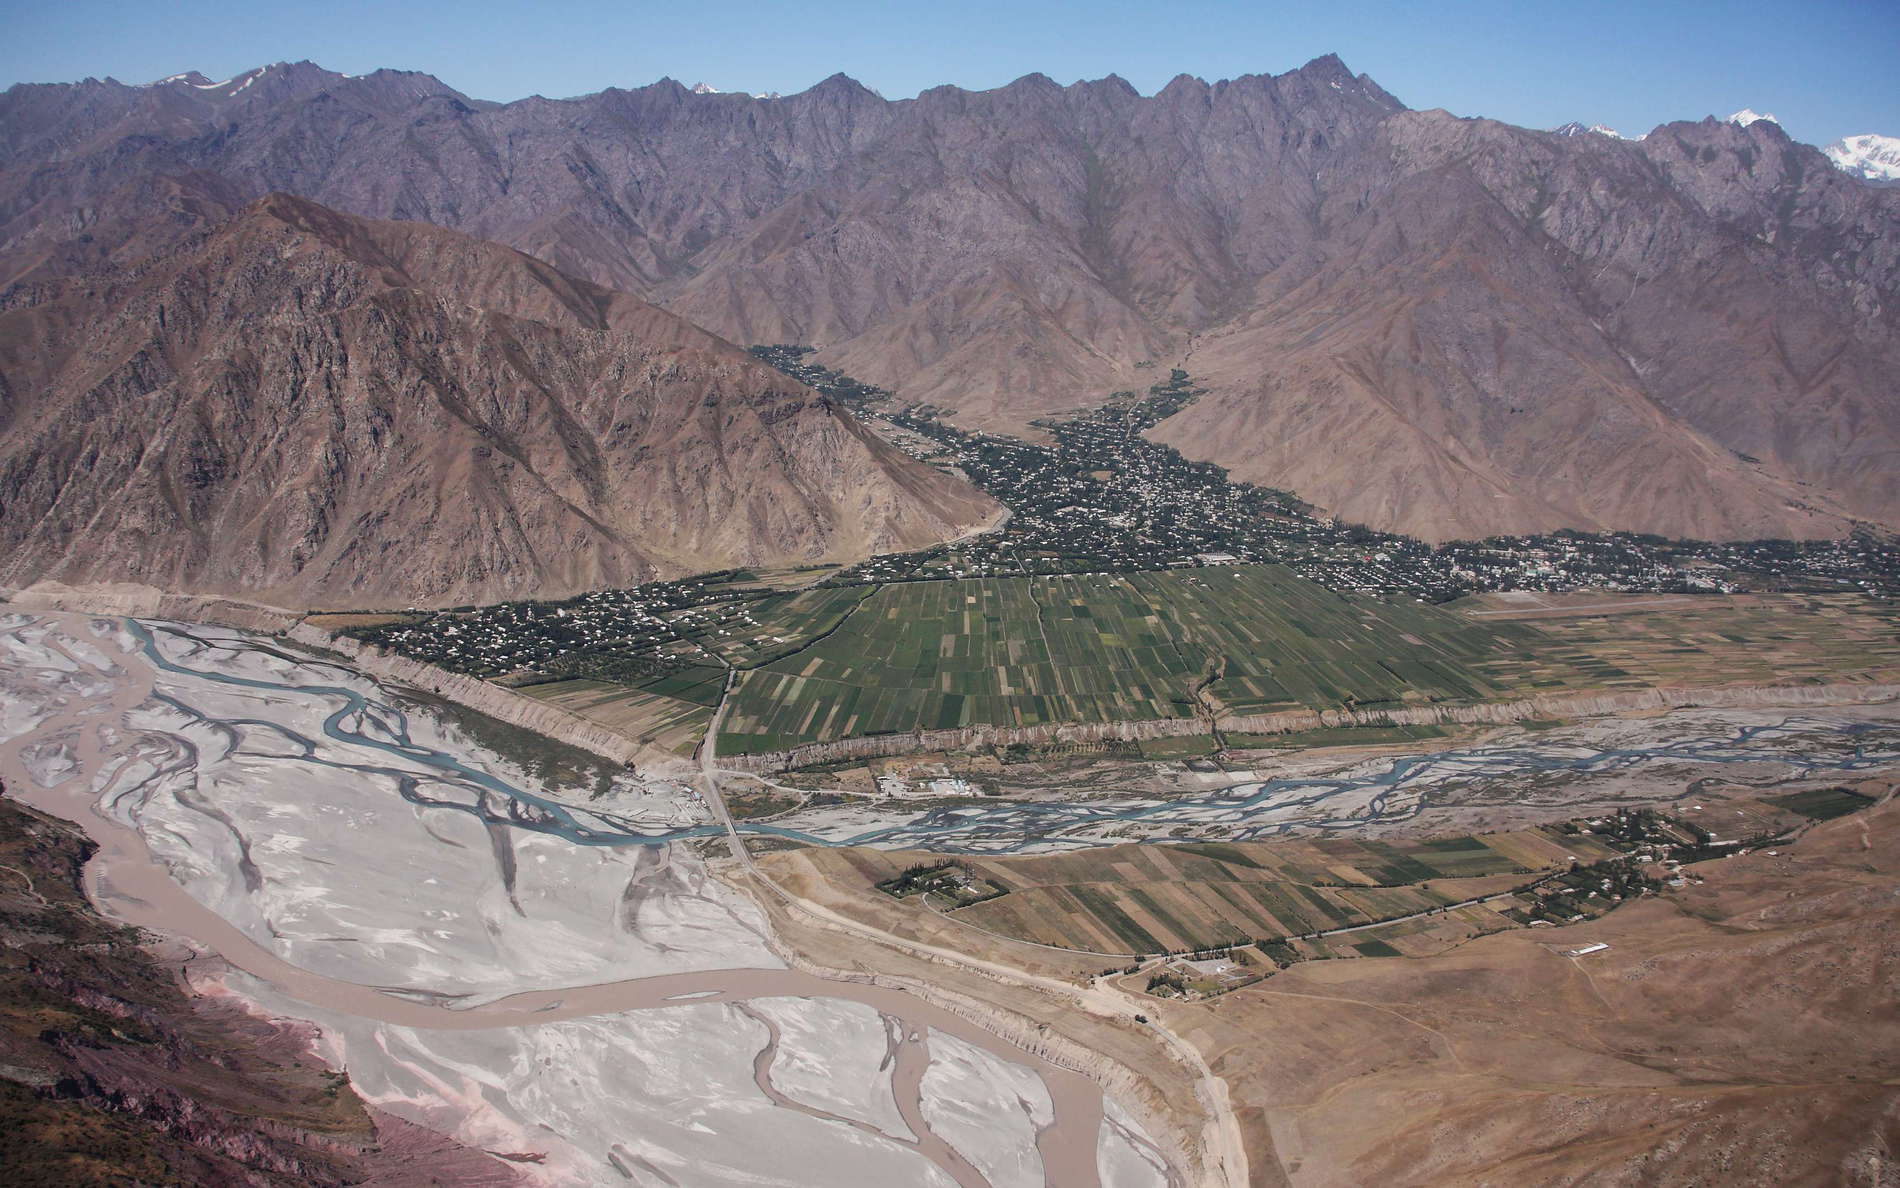 Surkhob Valley and Jirgatol